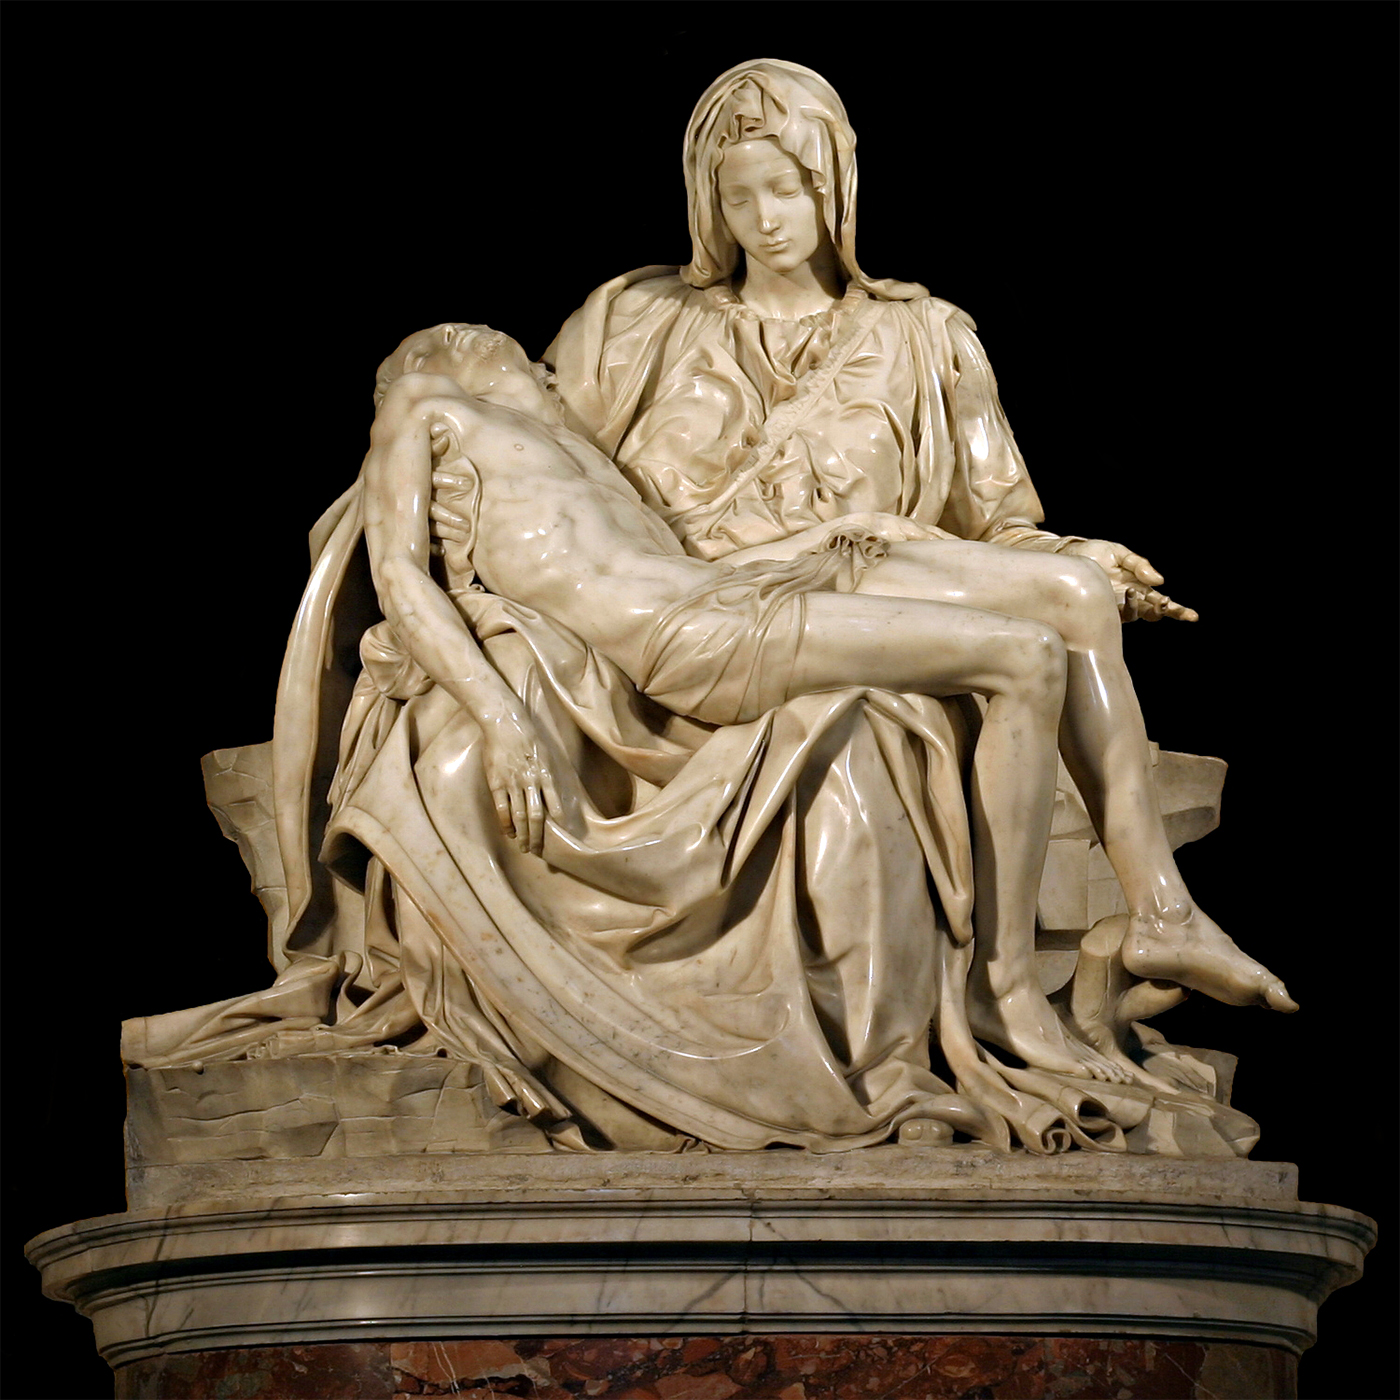 The Pietà by Michelangelo Buonarroti in all its splendour - Wikimedia.org , CC BY 2.5